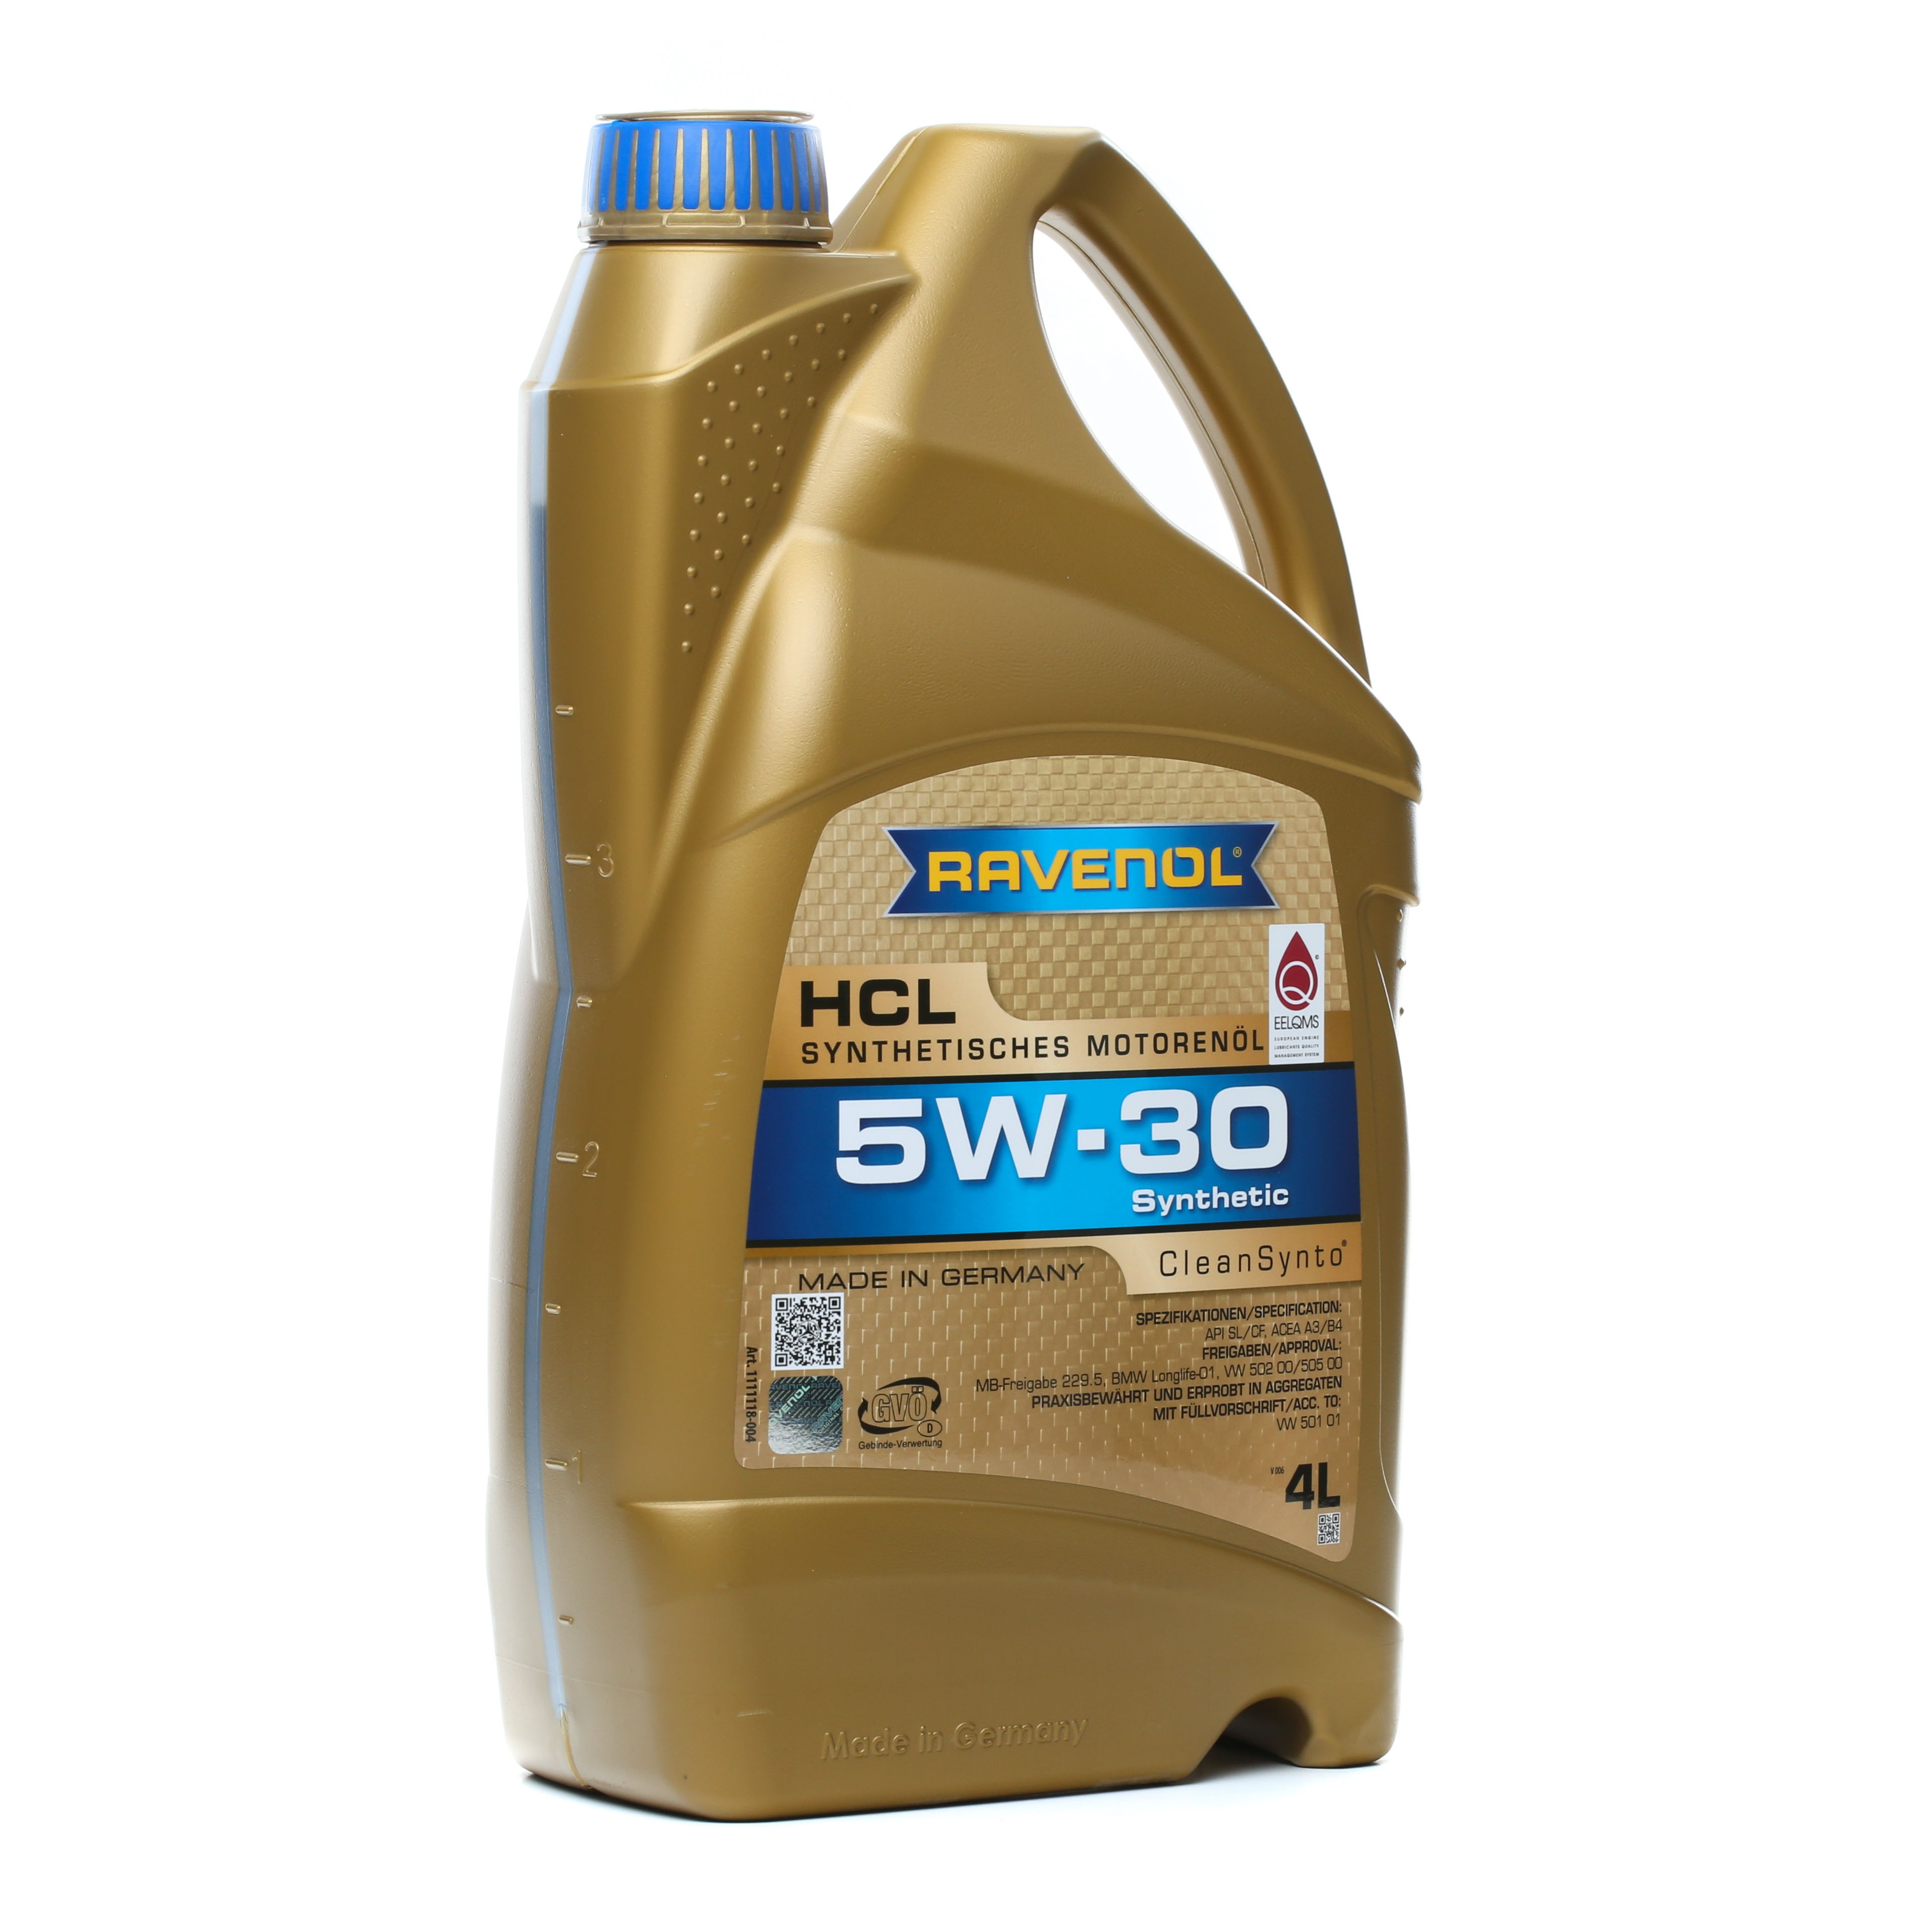 RAVENOL HCL 1111118-004-01-999 Engine oil 5W-30, 4l, Synthetic Oil